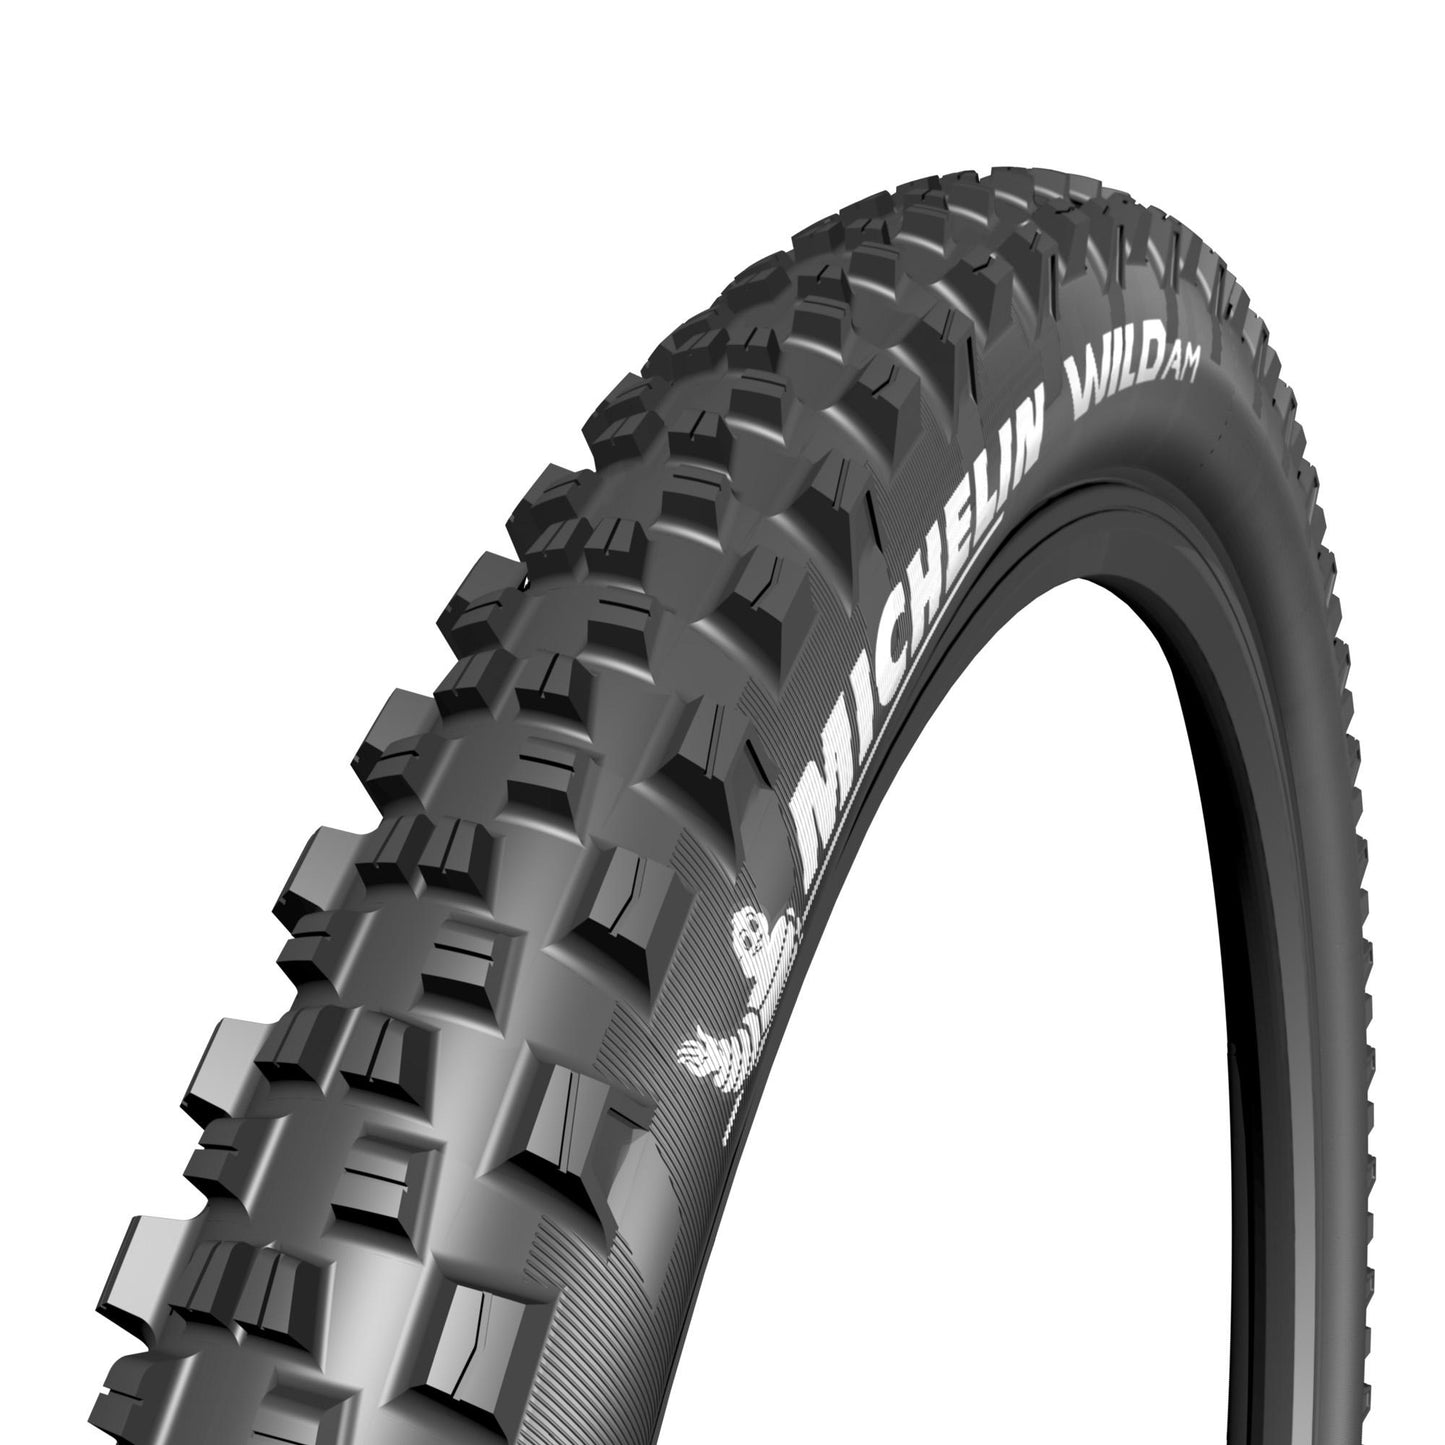 Michelin Wild AM Performance Line Tyre